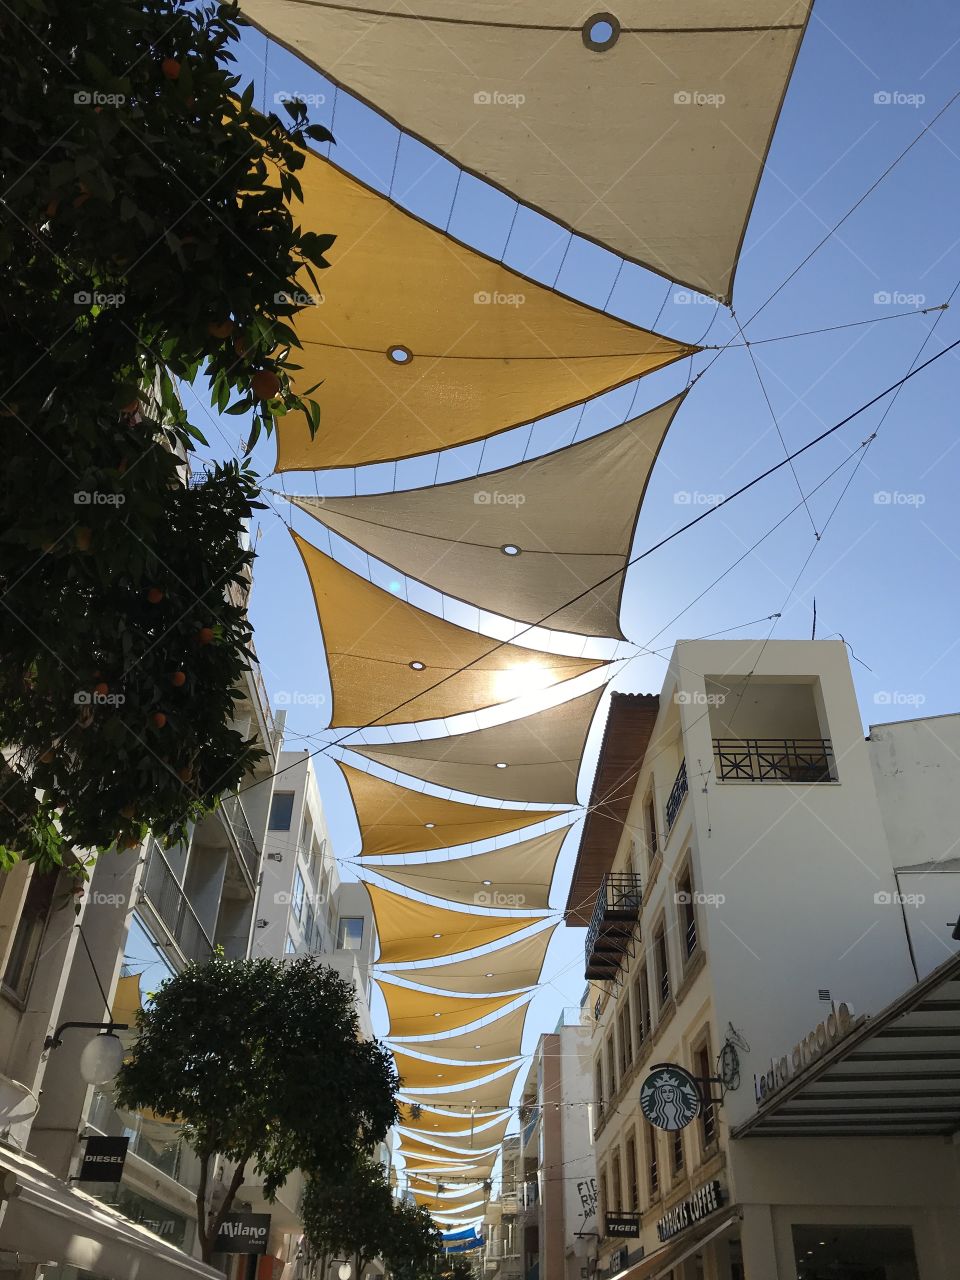 Ledras Street, Nicosia Cyprus